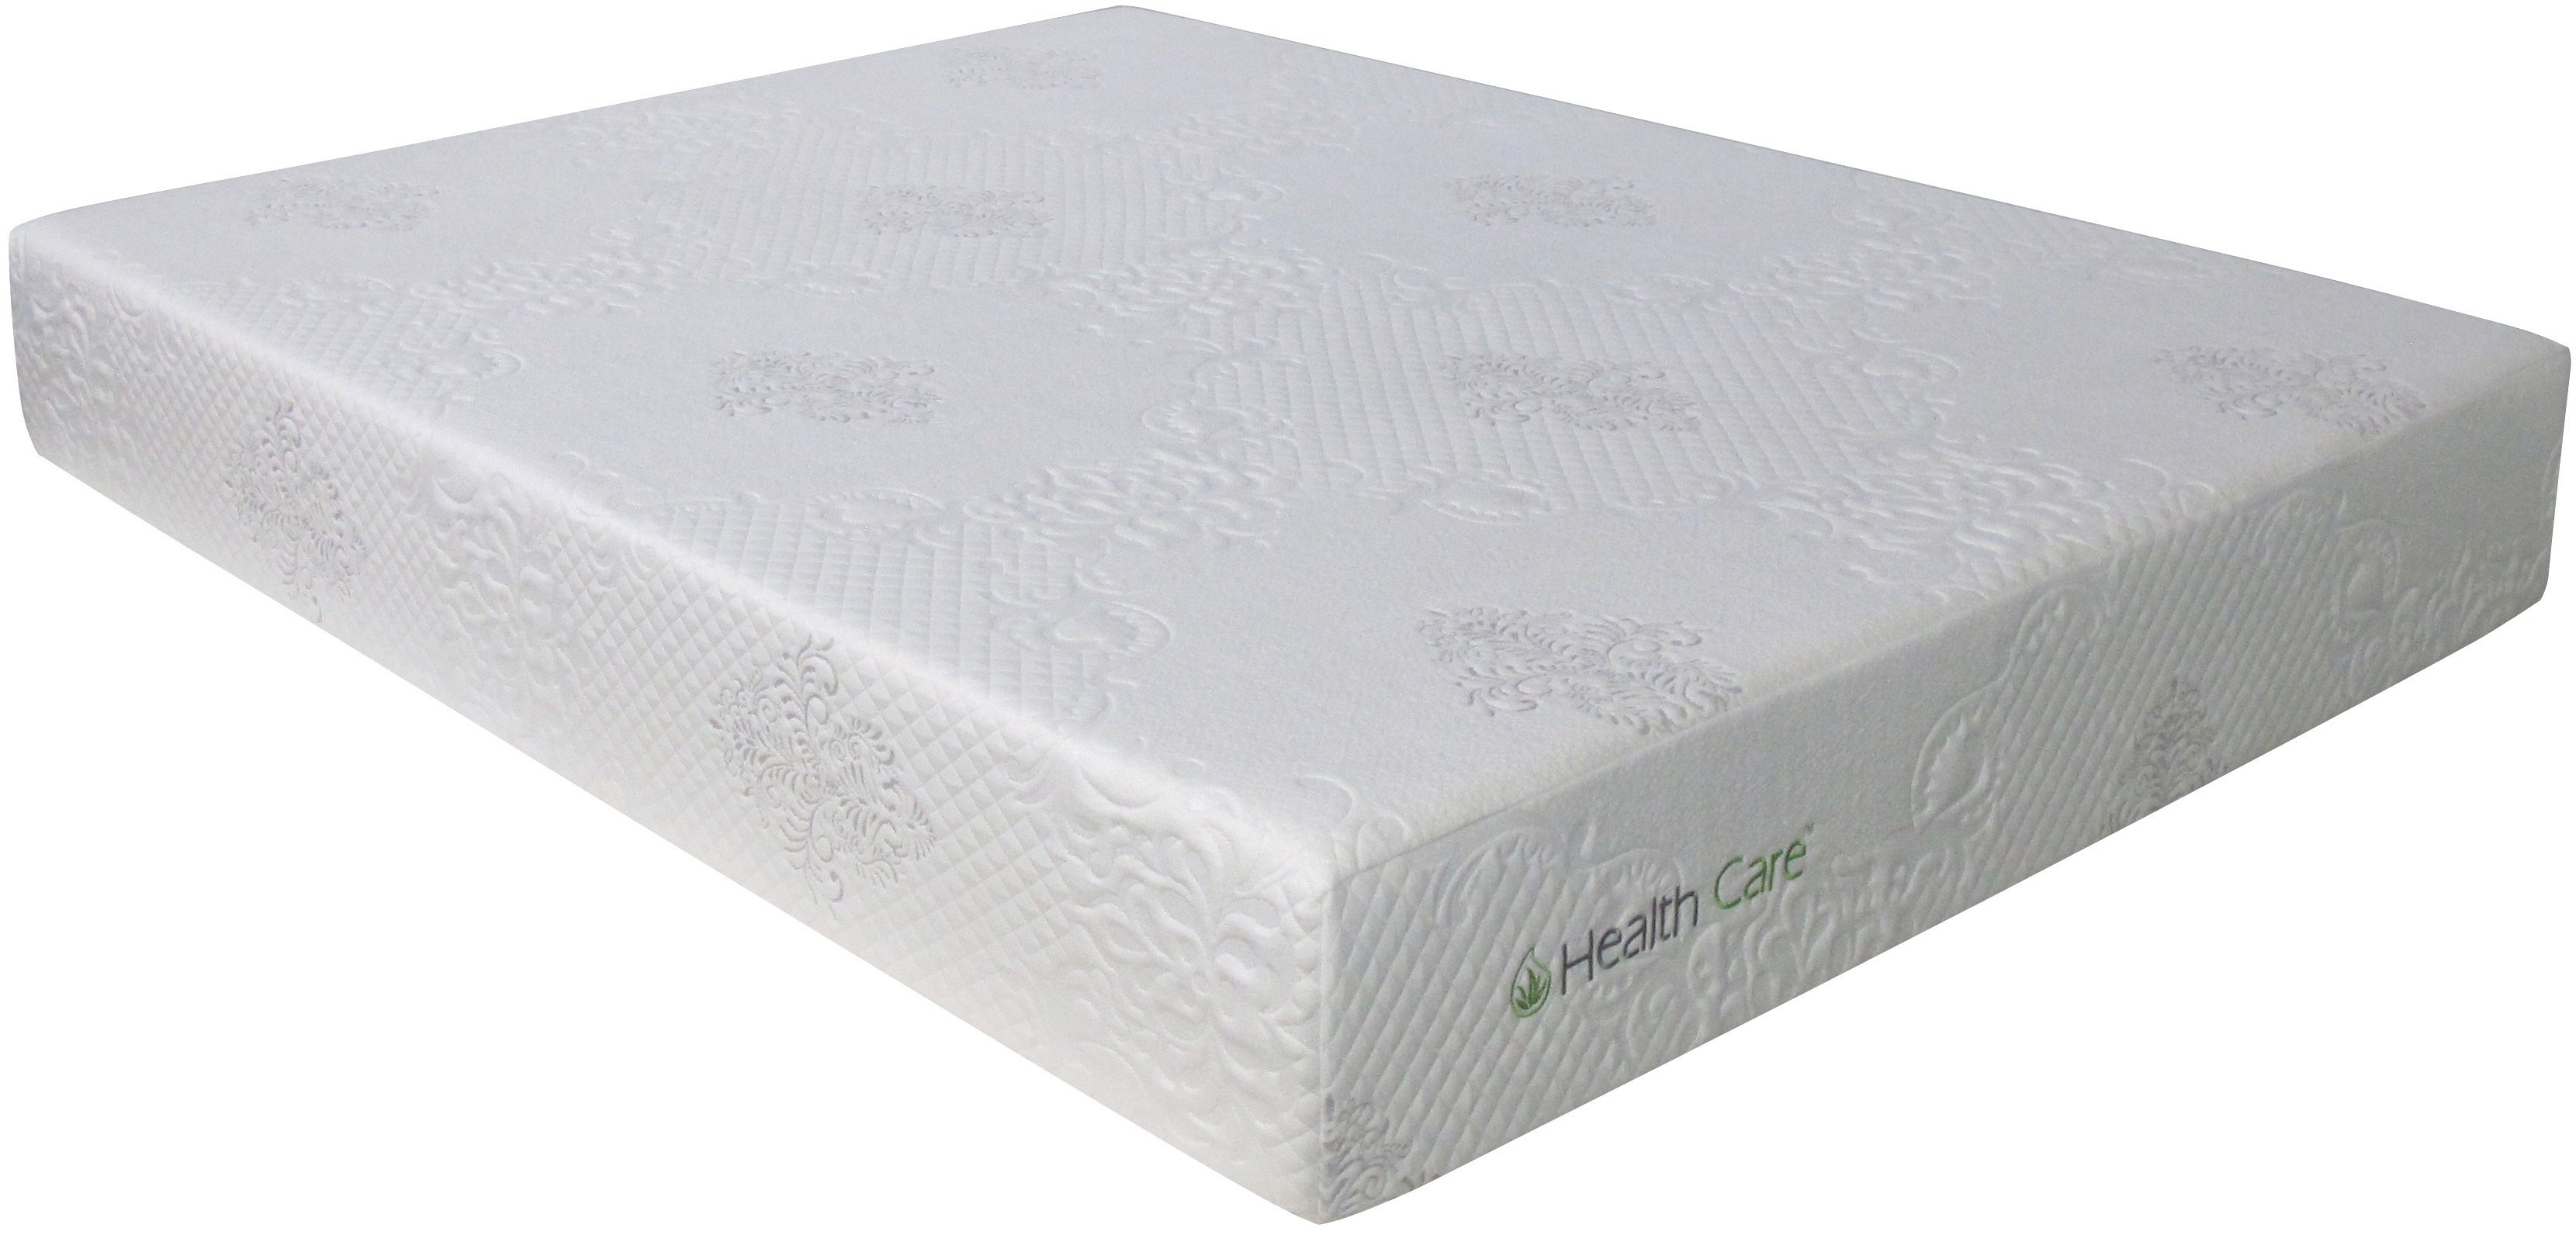 Twin-XL 10" ComfortGel Memory Foam Mattress with ...